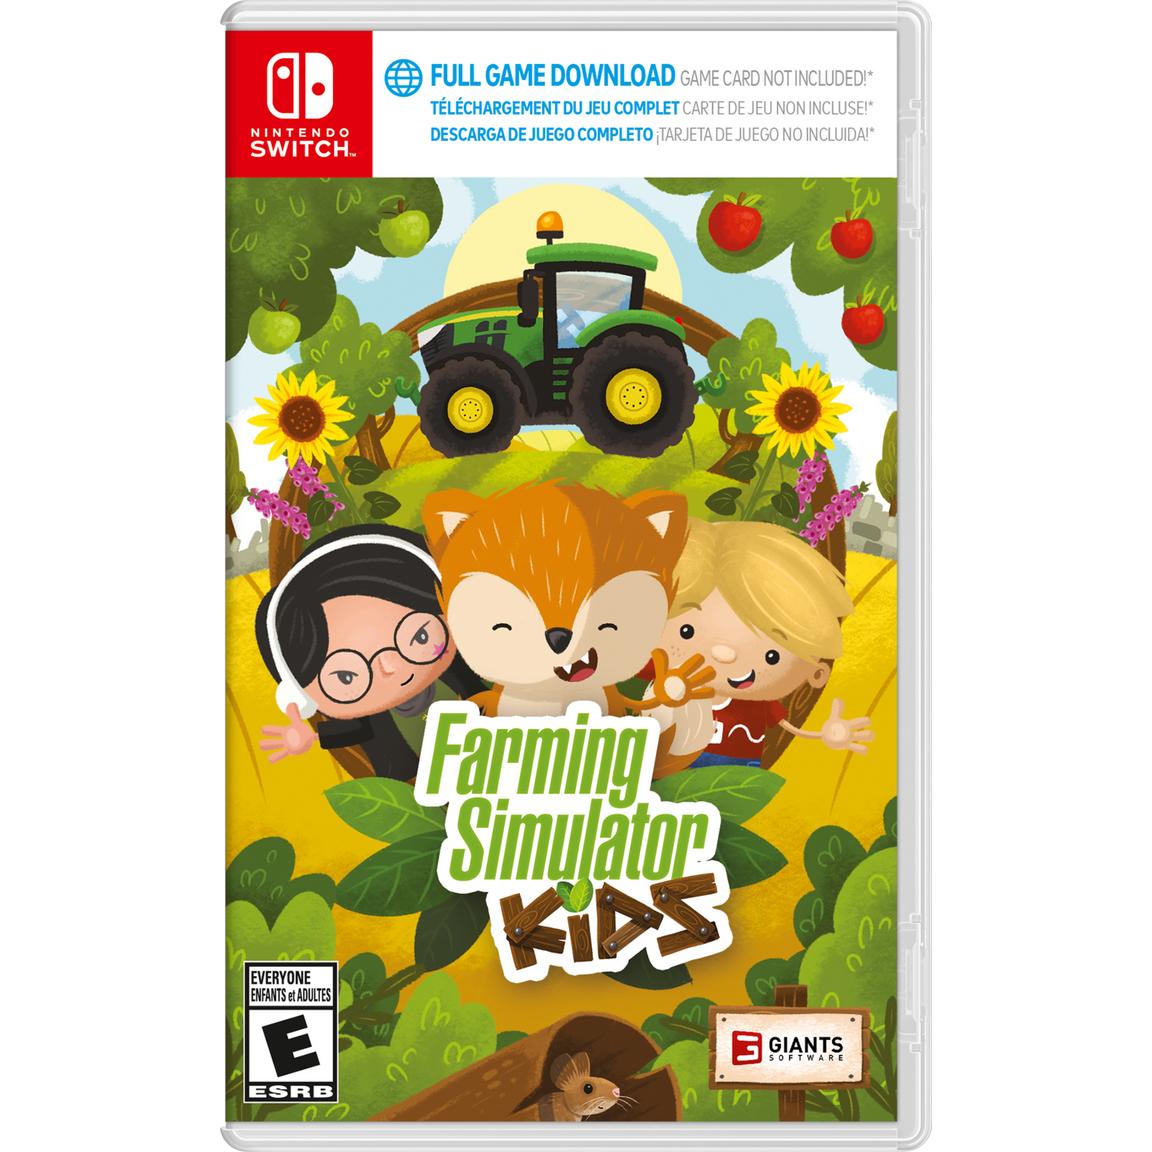 Farming Simulator Kids - Nintendo Switch